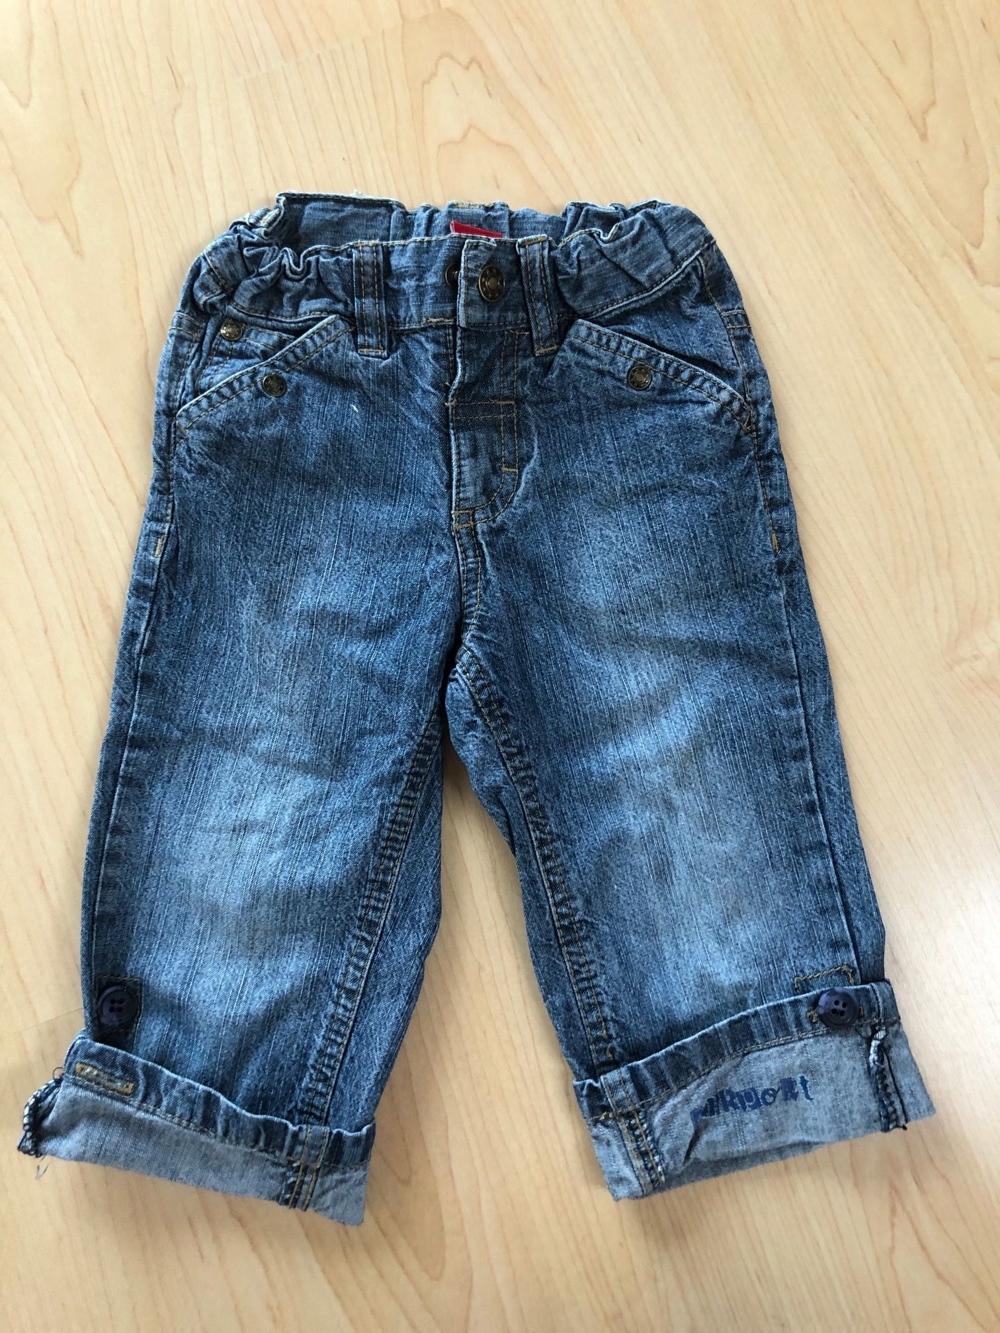 Coole Jeans zum hochkrempeln - Jungs - Gr. 86 - Noname - Sehr gut